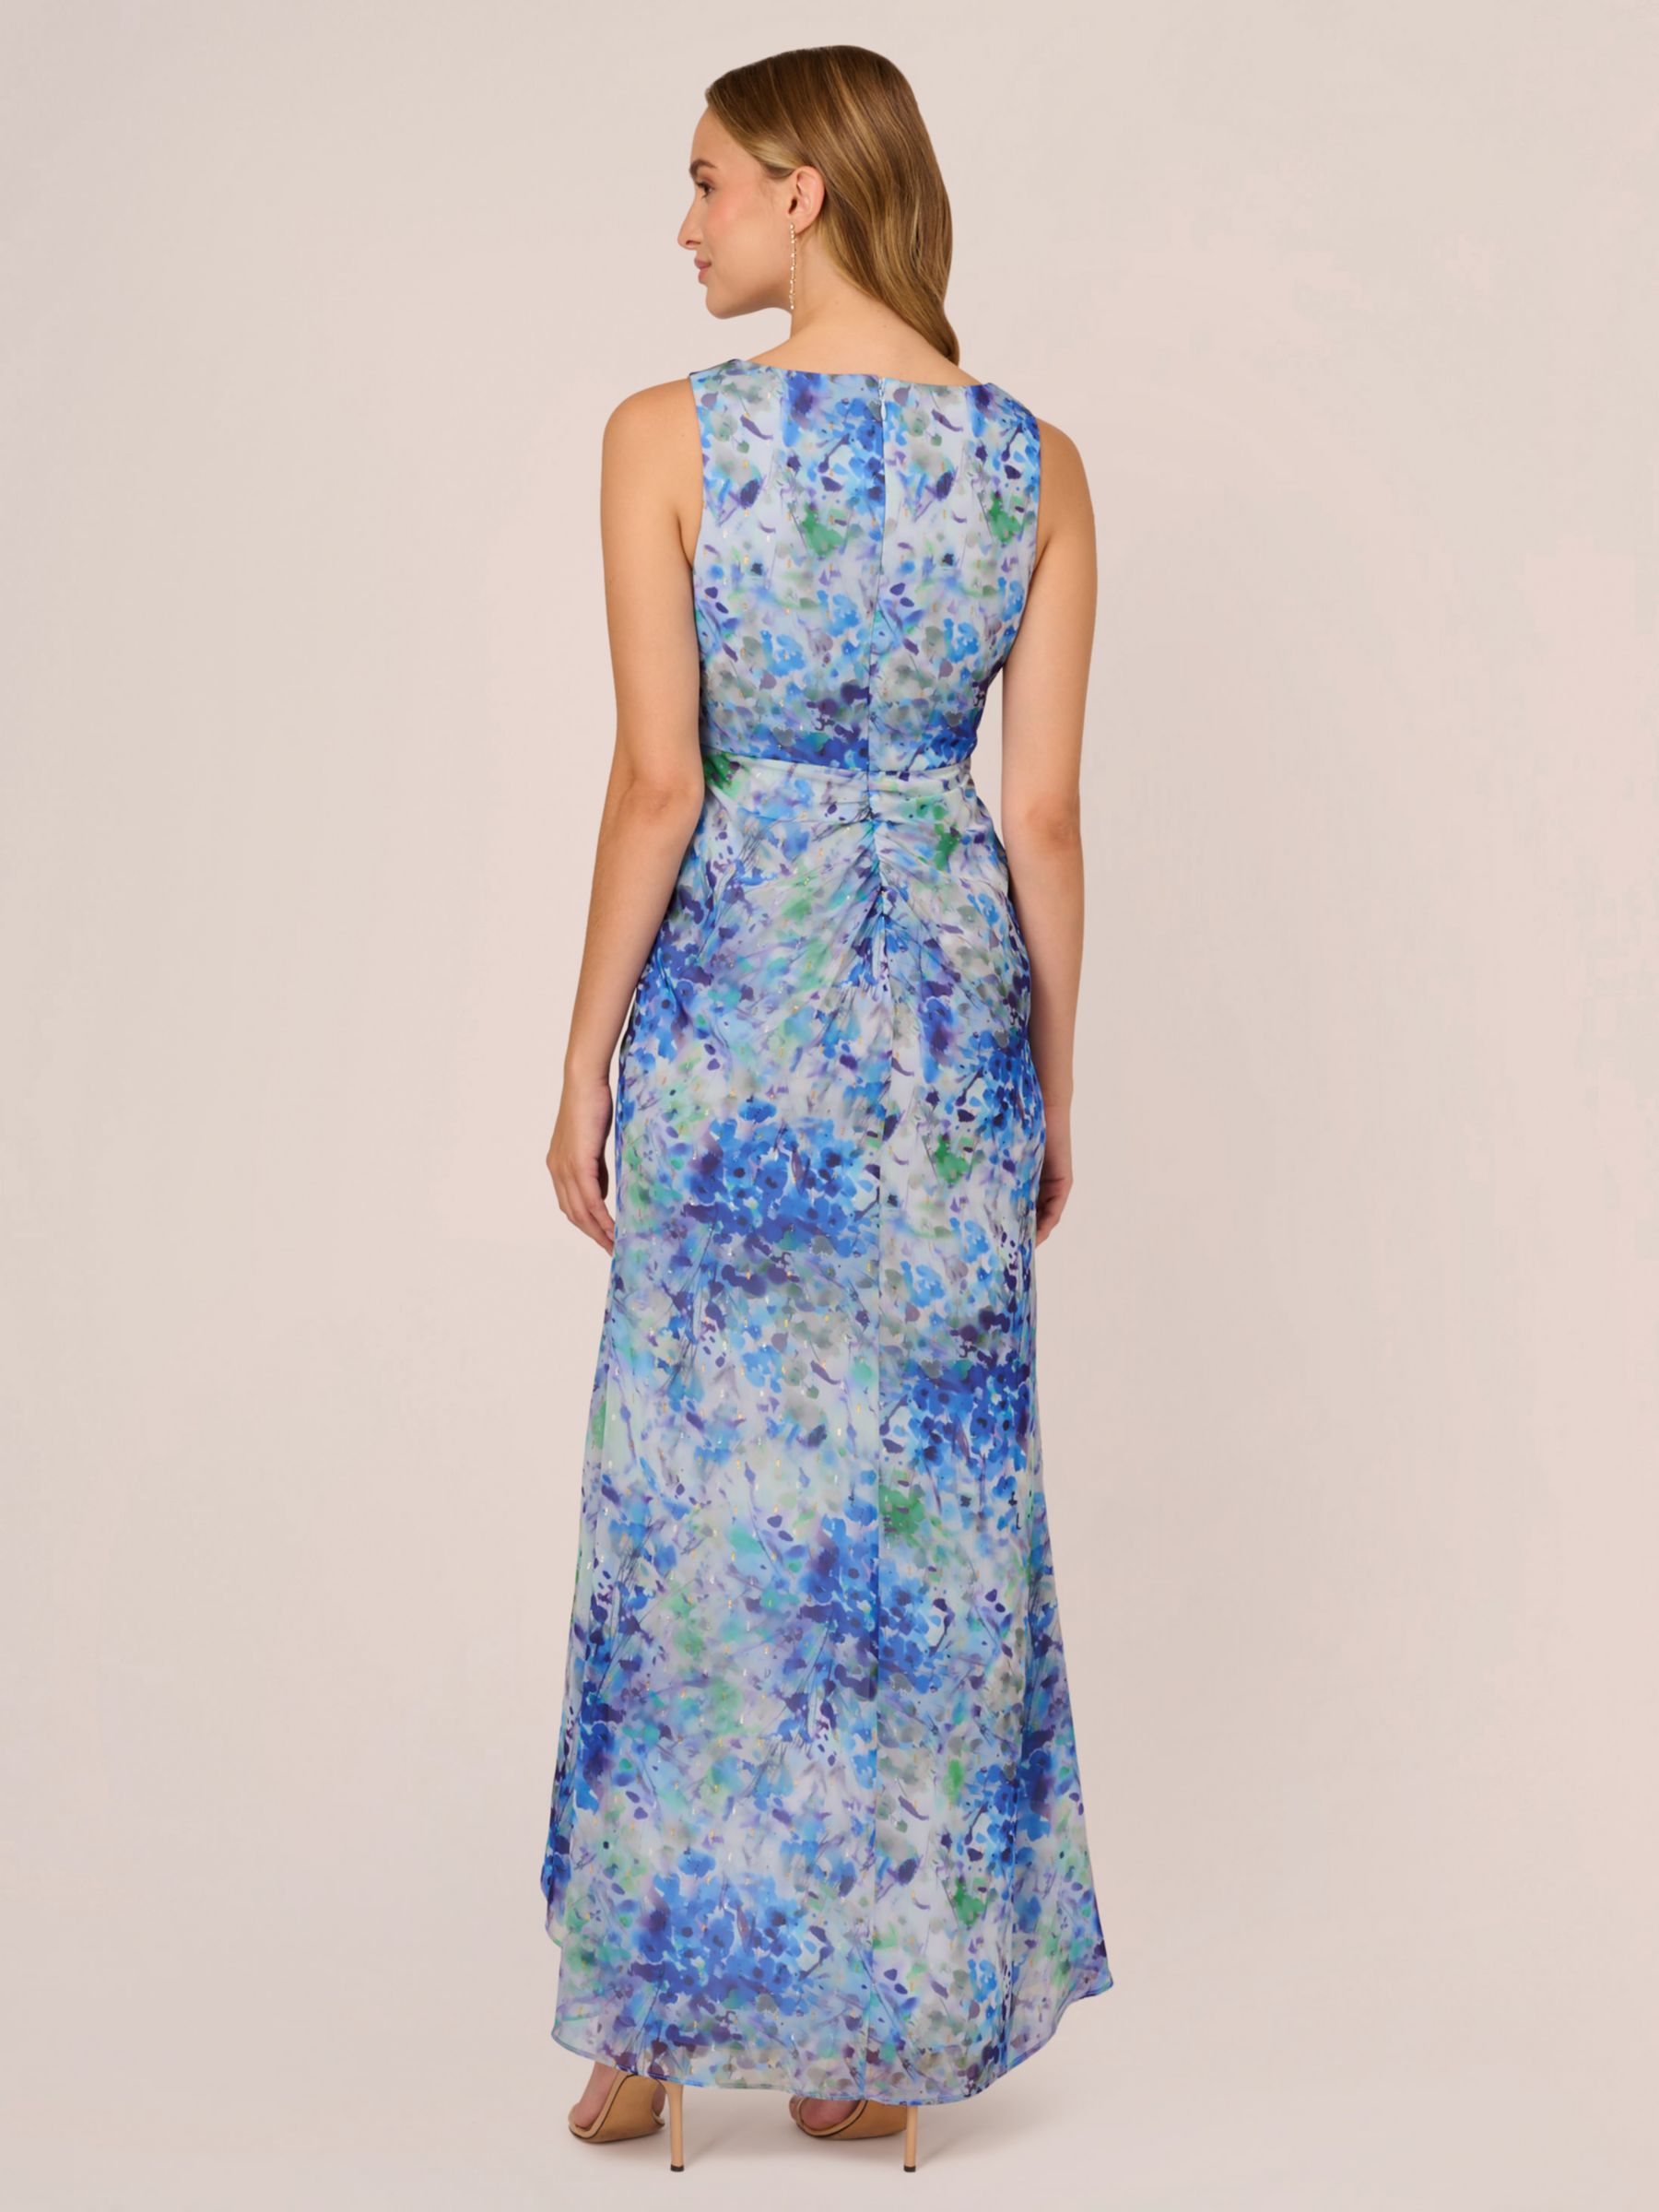 Adrianna Papell Metallic Floral Maxi Dress, Blue/Multi, 6